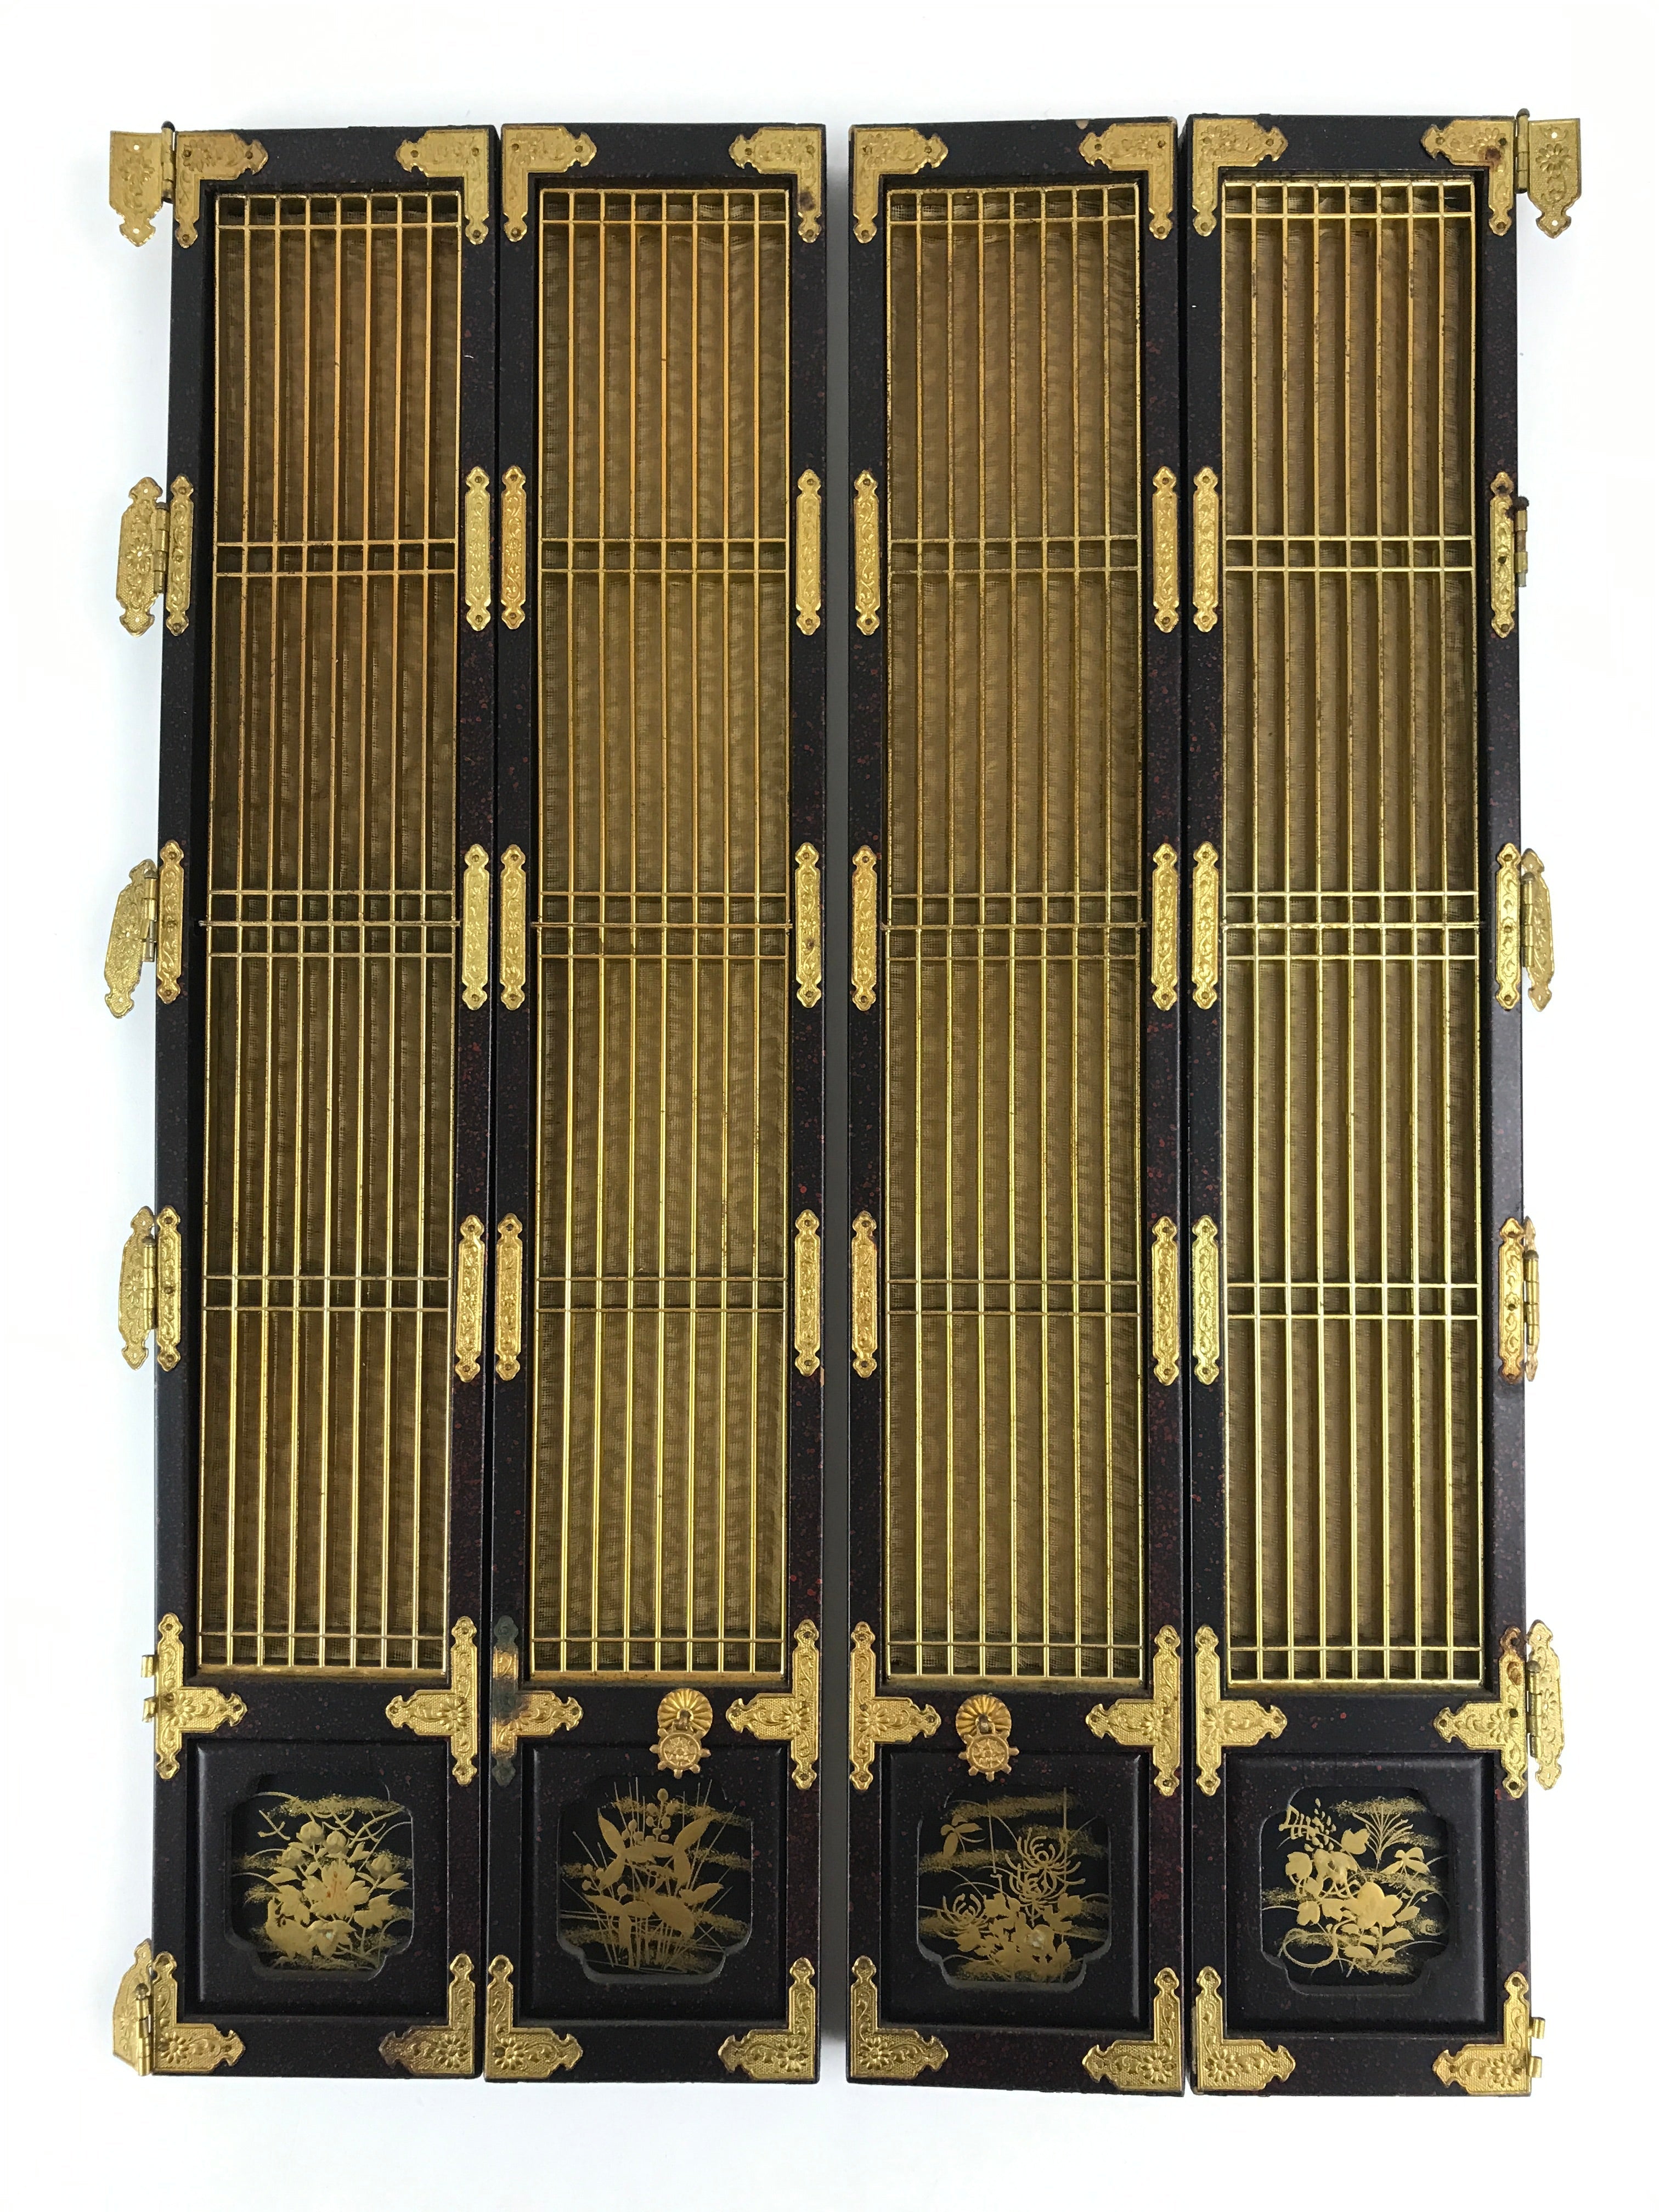 Japanese Buddhist Altar Part Door Panel Vtg Gold Gilt Temple Lacquered Gold BA8